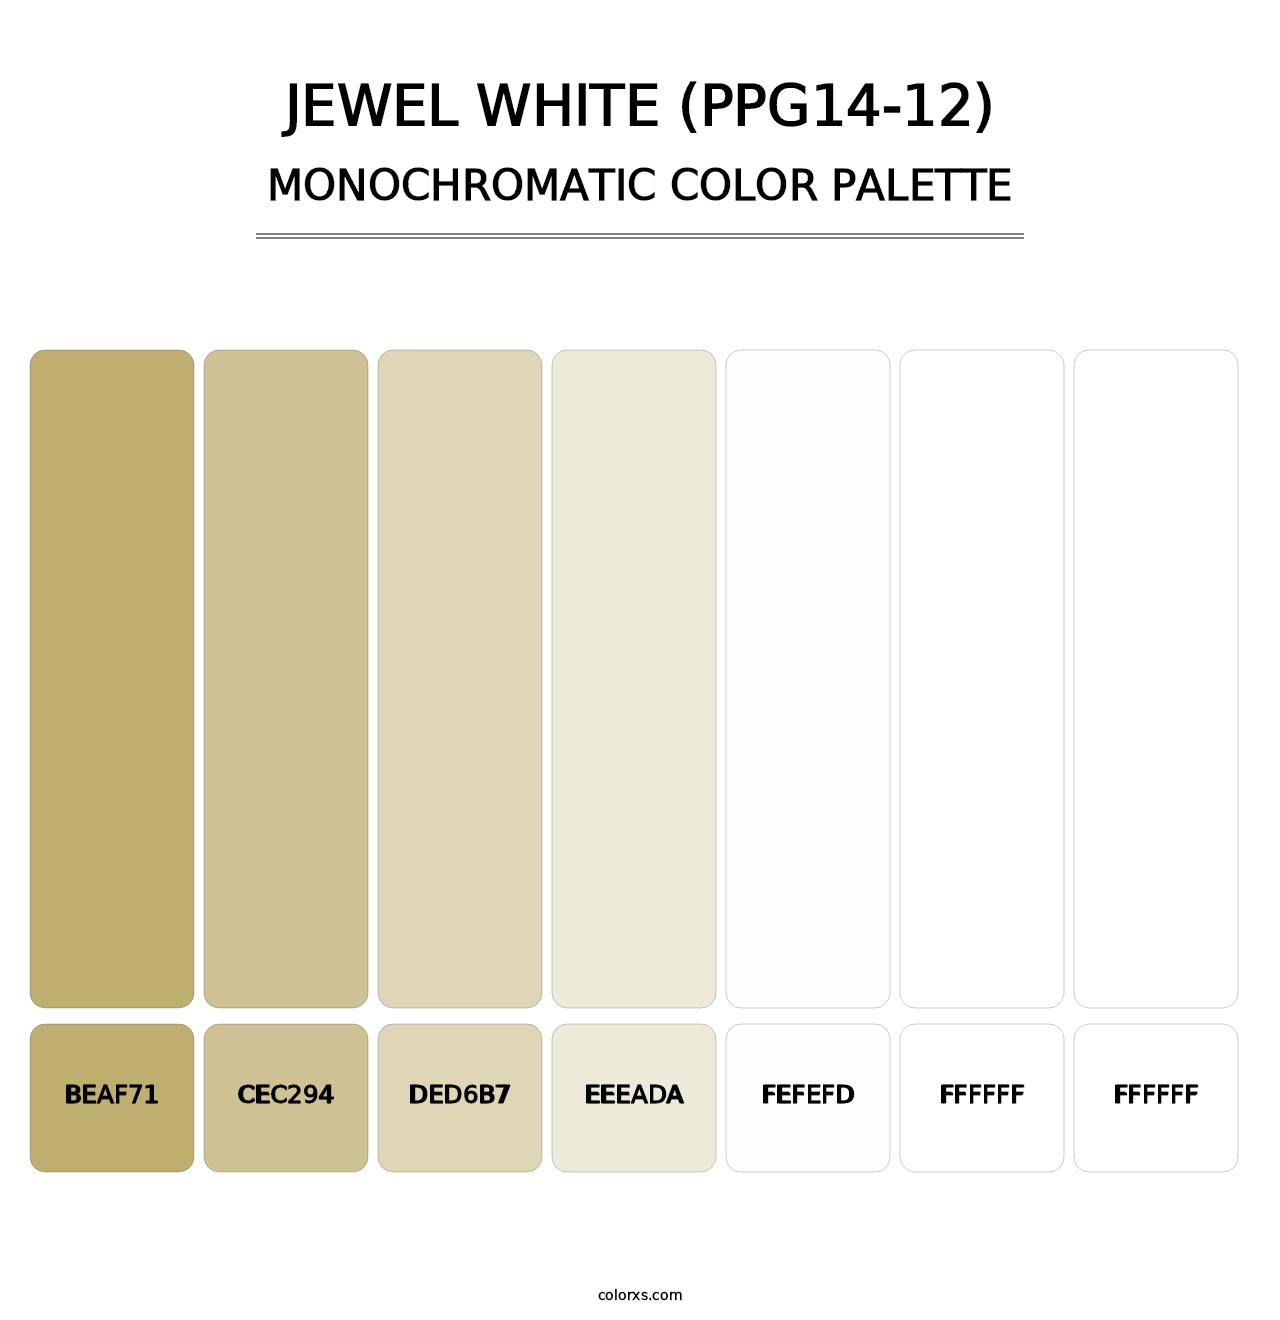 Jewel White (PPG14-12) - Monochromatic Color Palette